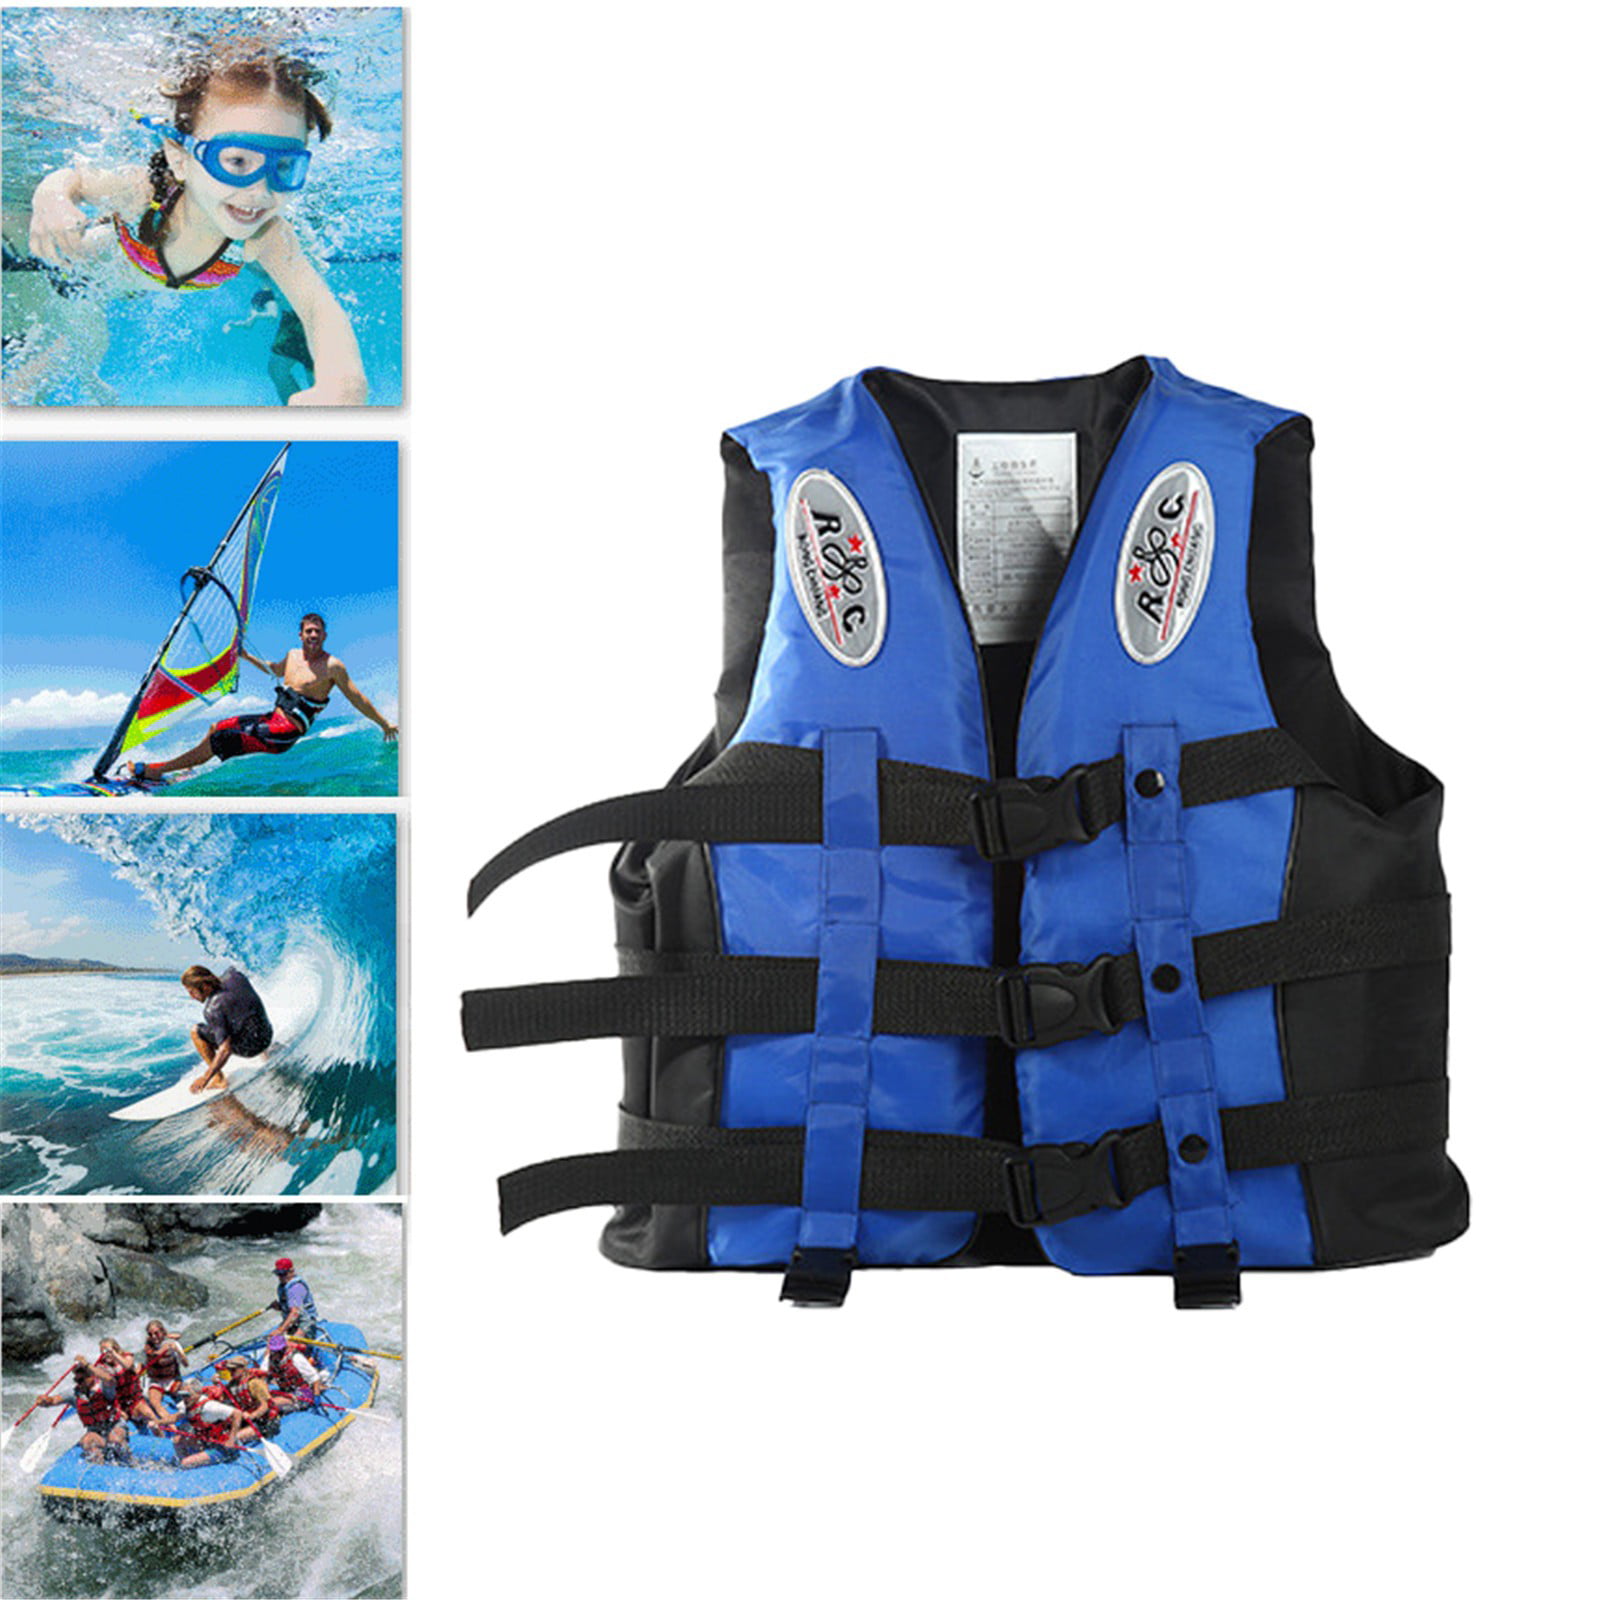 Adult Kids Life Jacket Kayak Ski Buoyancy Aid Vest Sailing Fishing Watersport US 